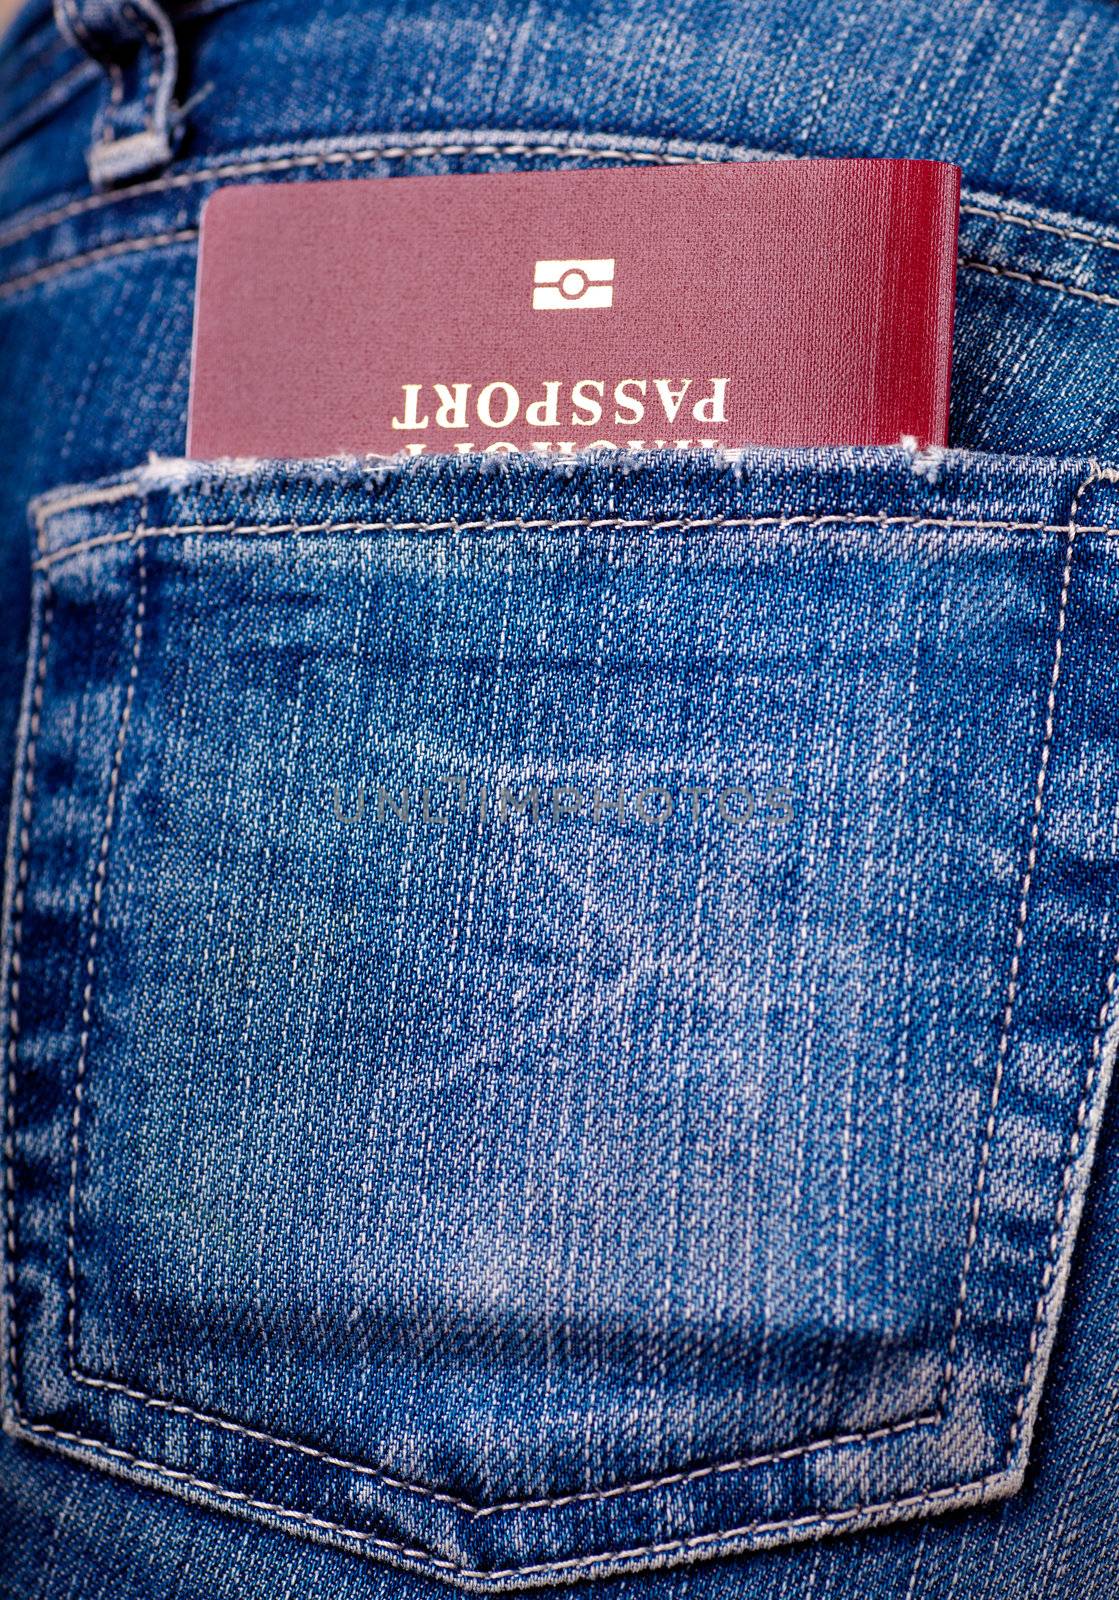 Closeup view of a denum pocket with a passport